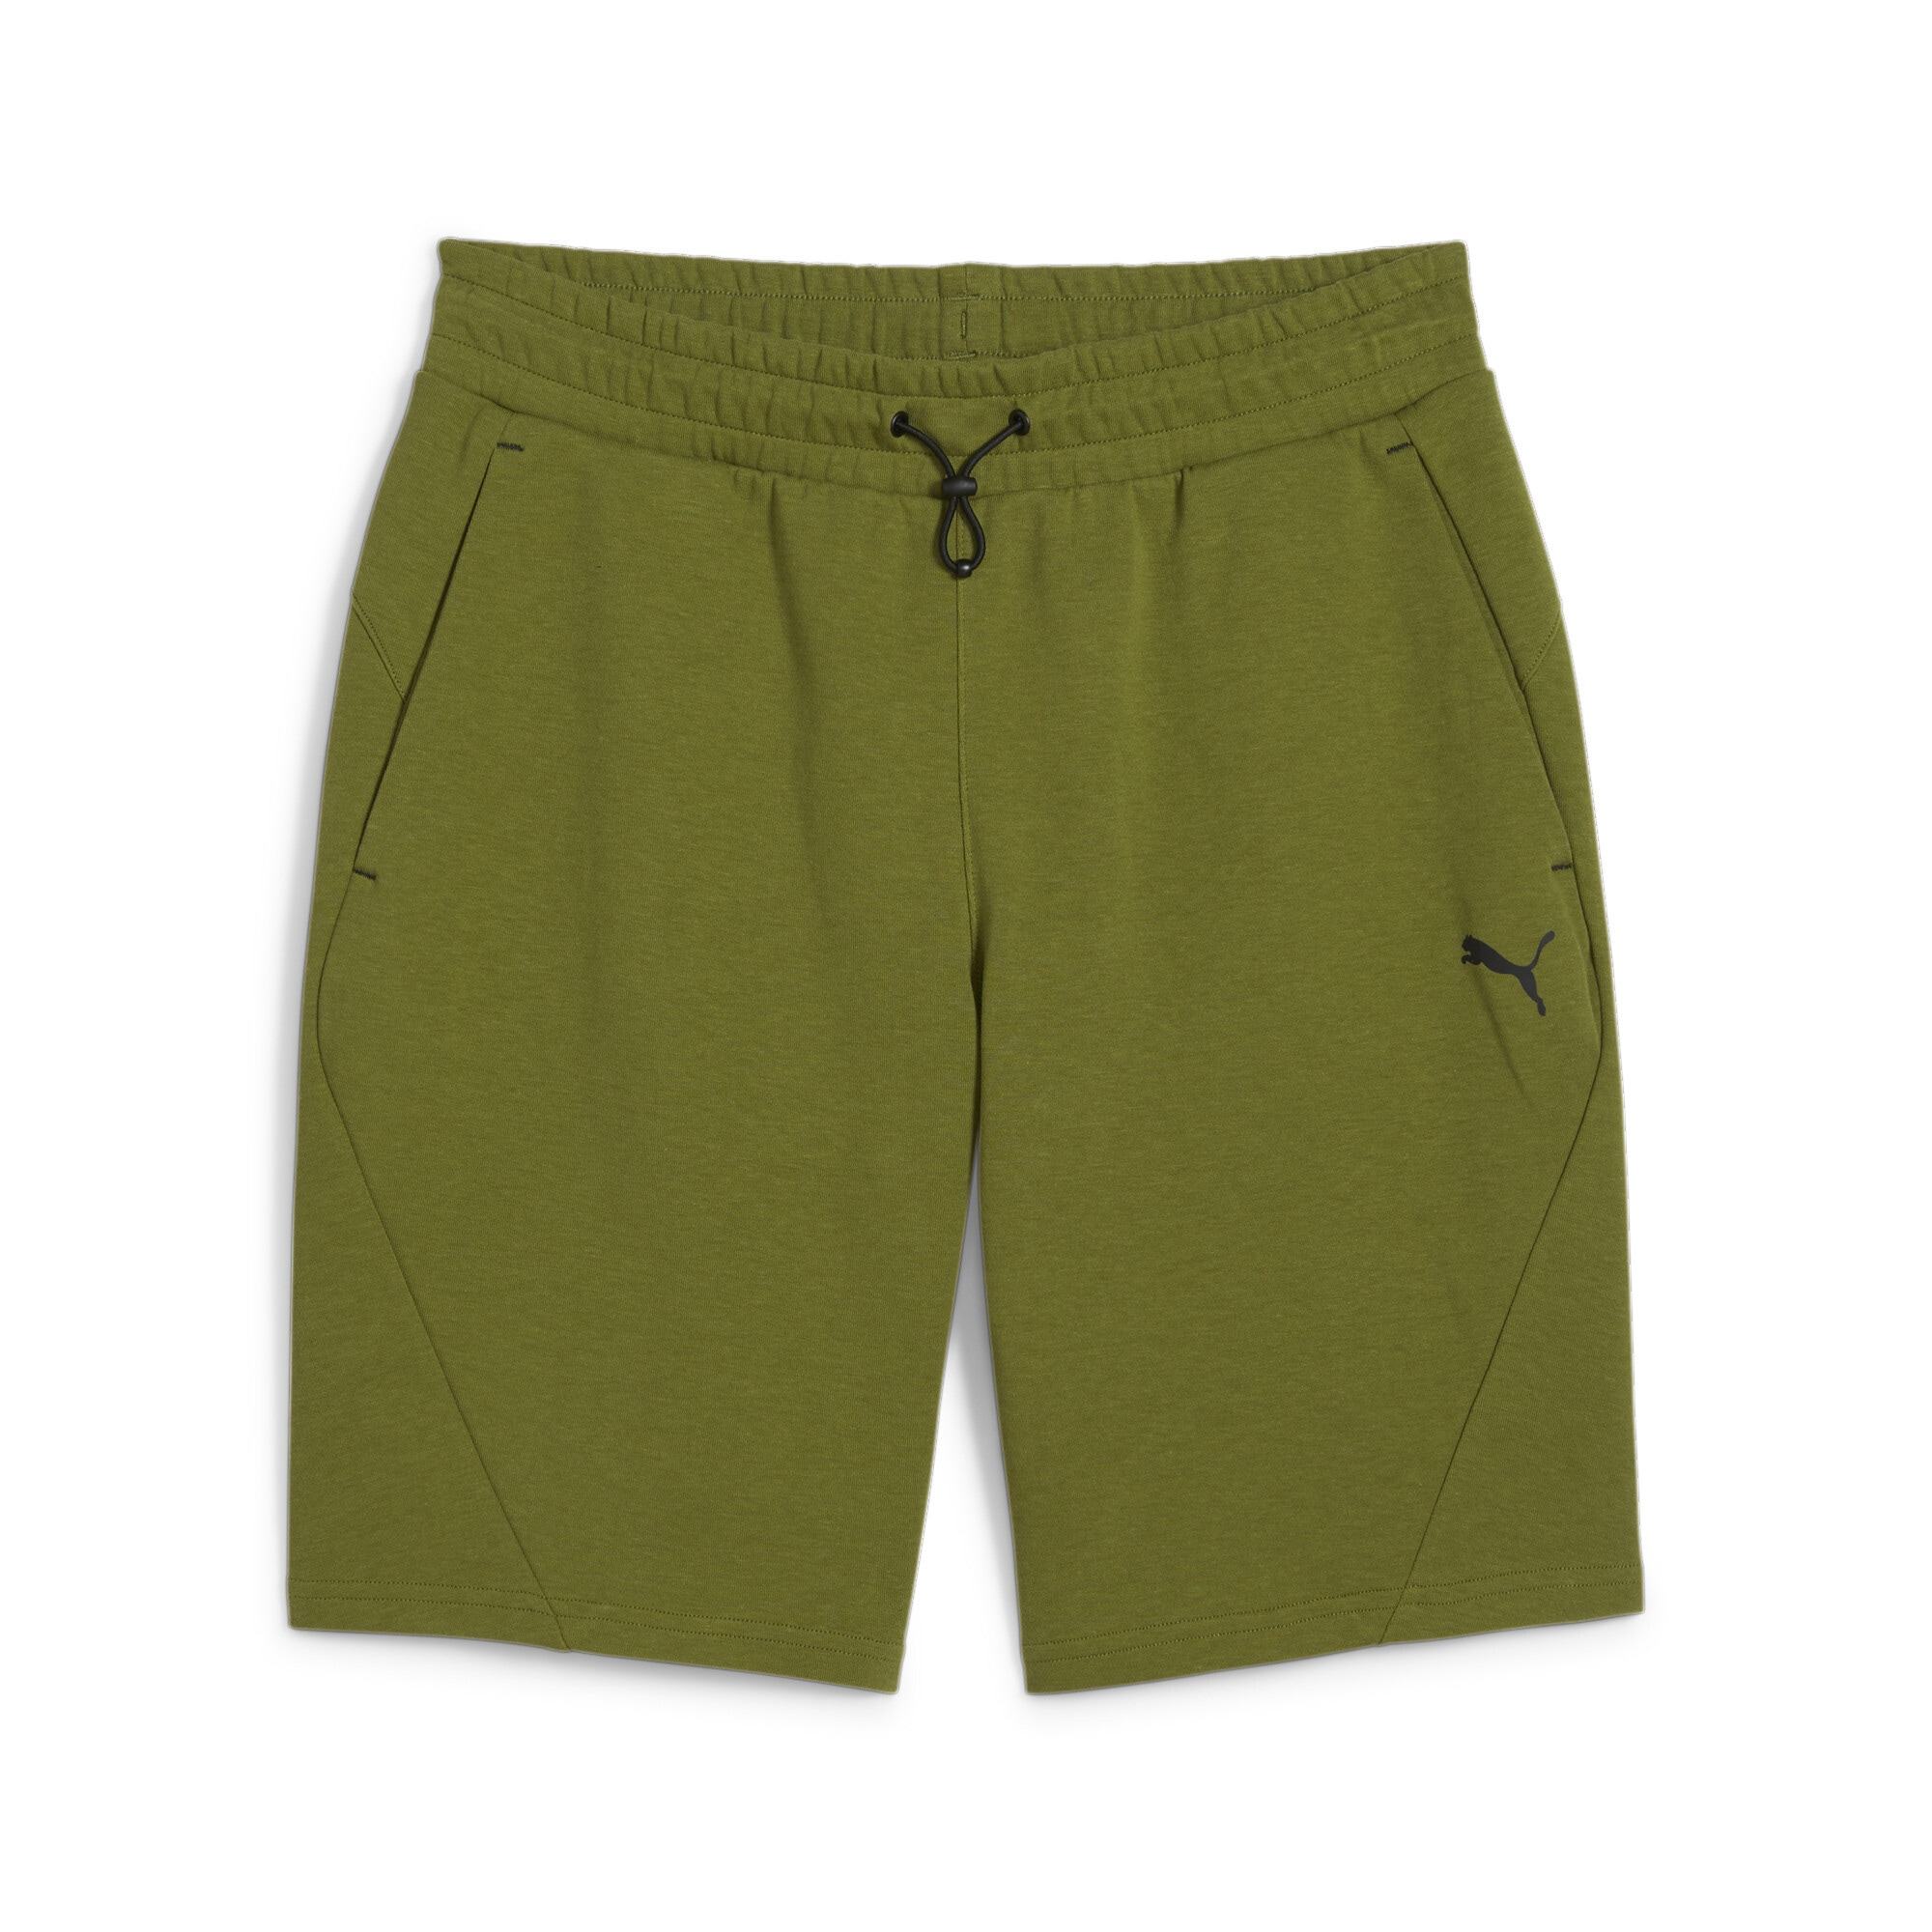 PUMA Sporthose »RAD/CAL shorts Herren«